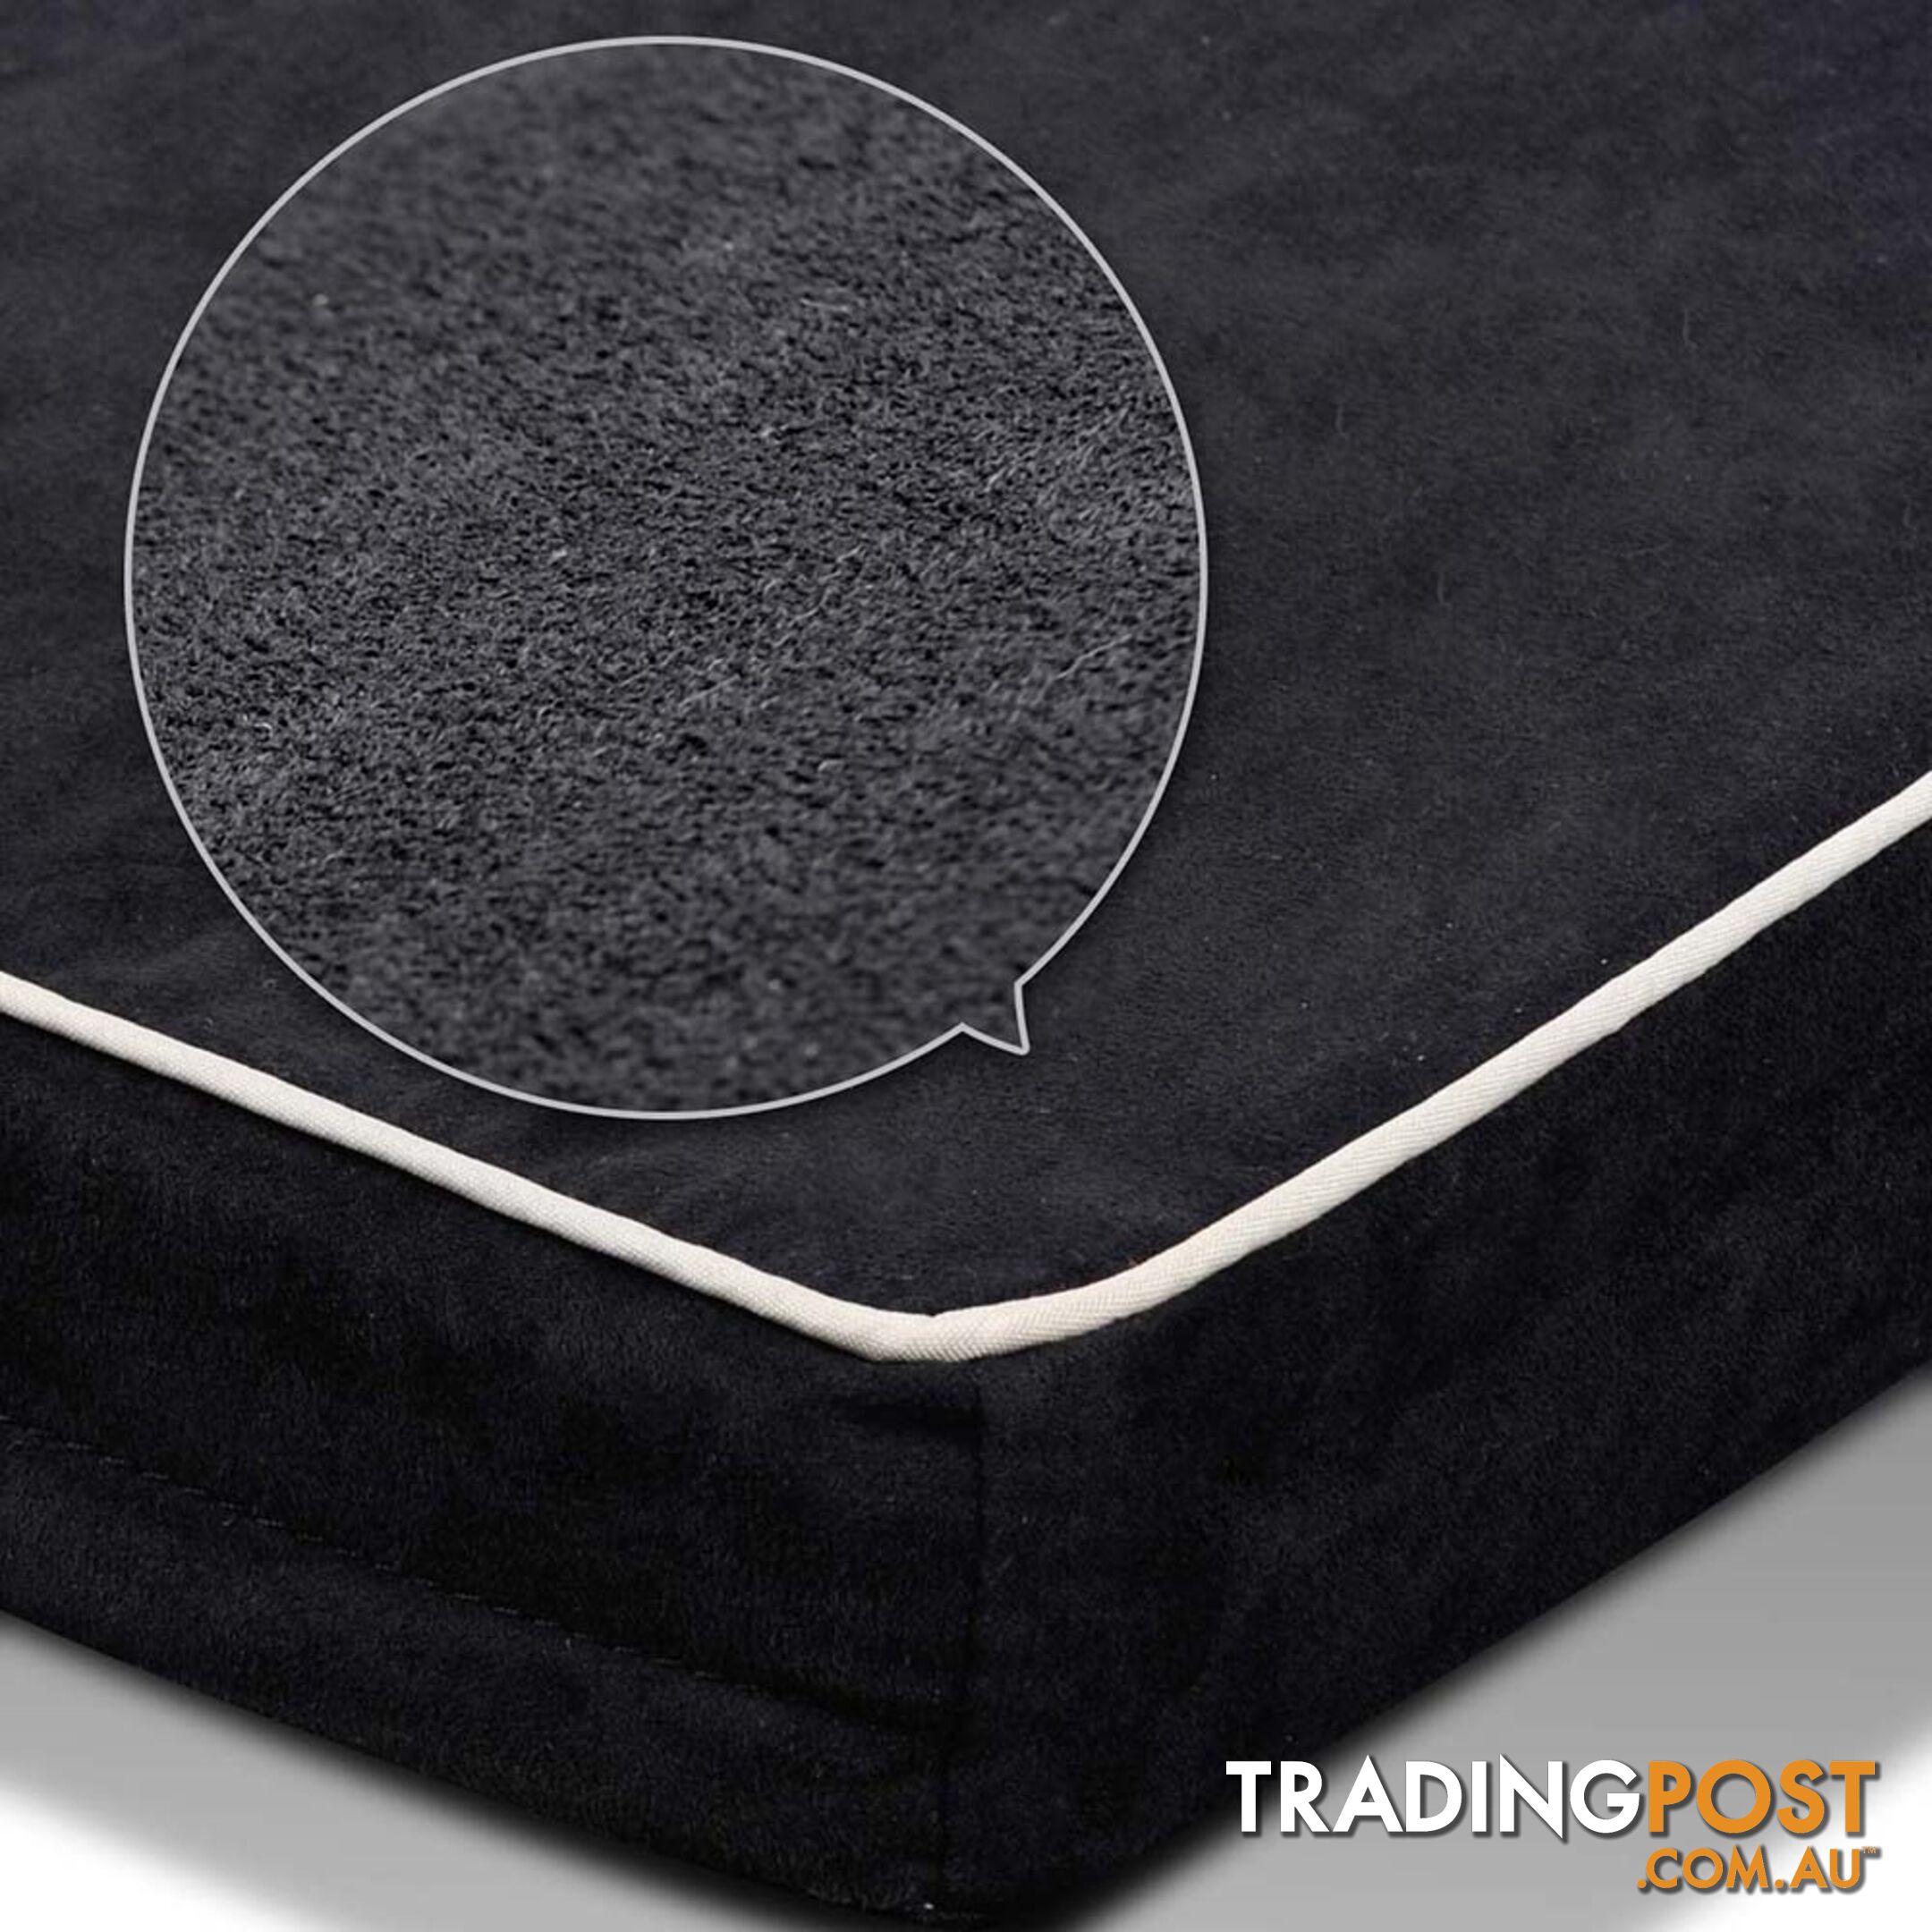 Pet Dog Anti Skid Sleep Memory Foam Mattress Bed Extra Large Black